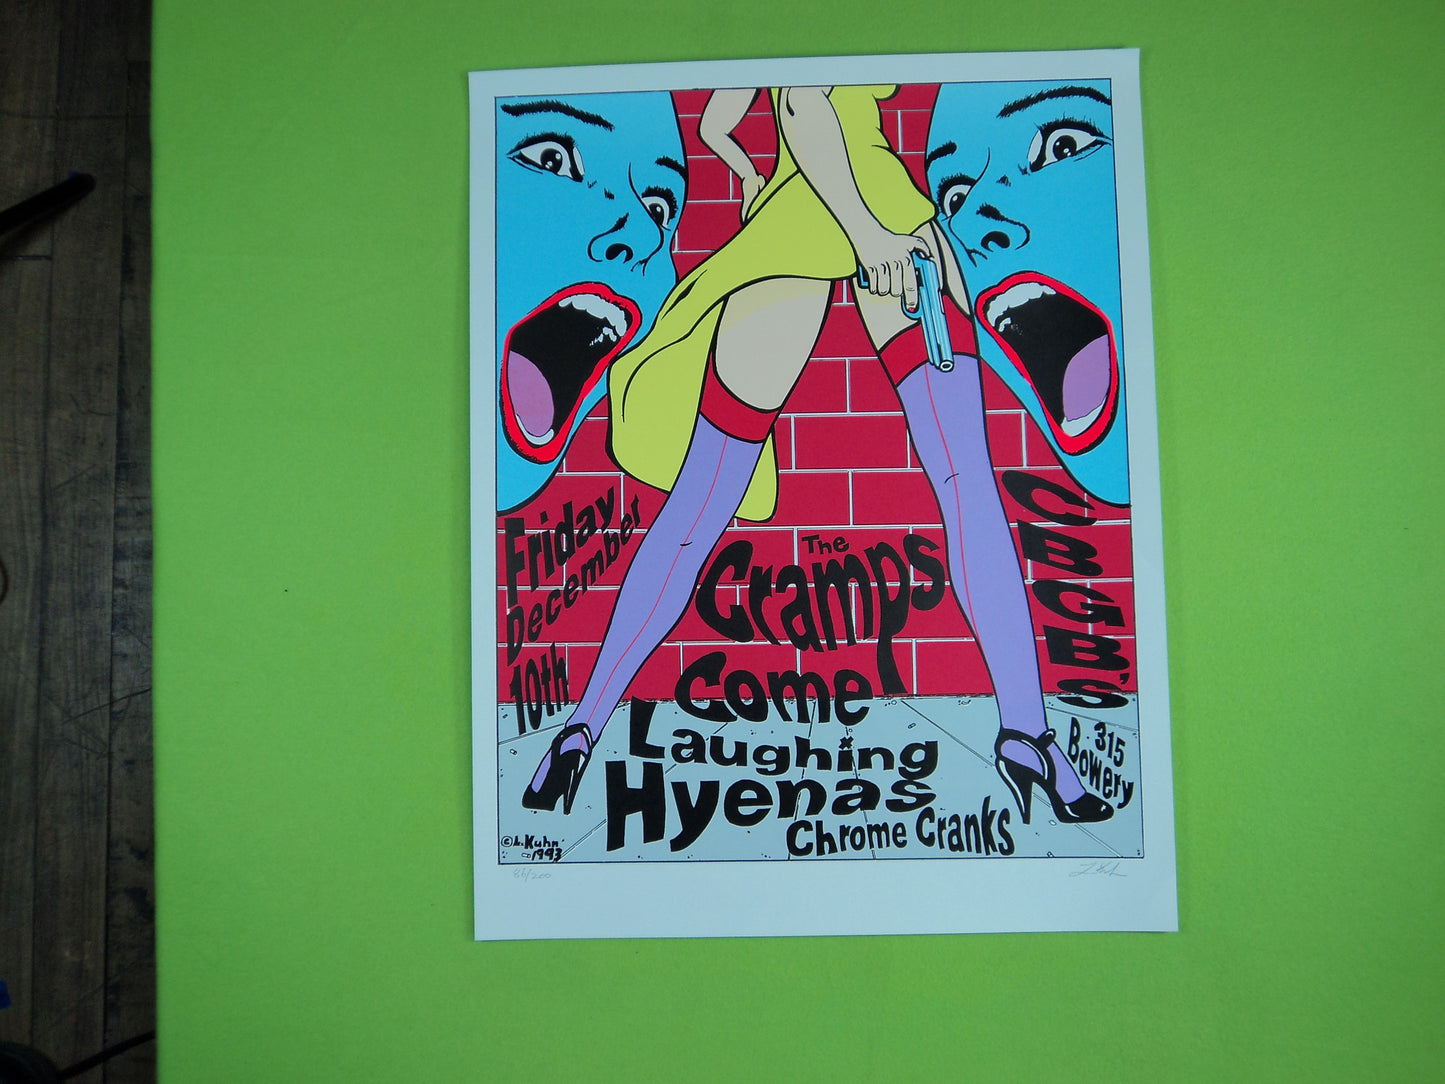 Lindsey Kuhn - 1993 - The Cramps Concert Poster